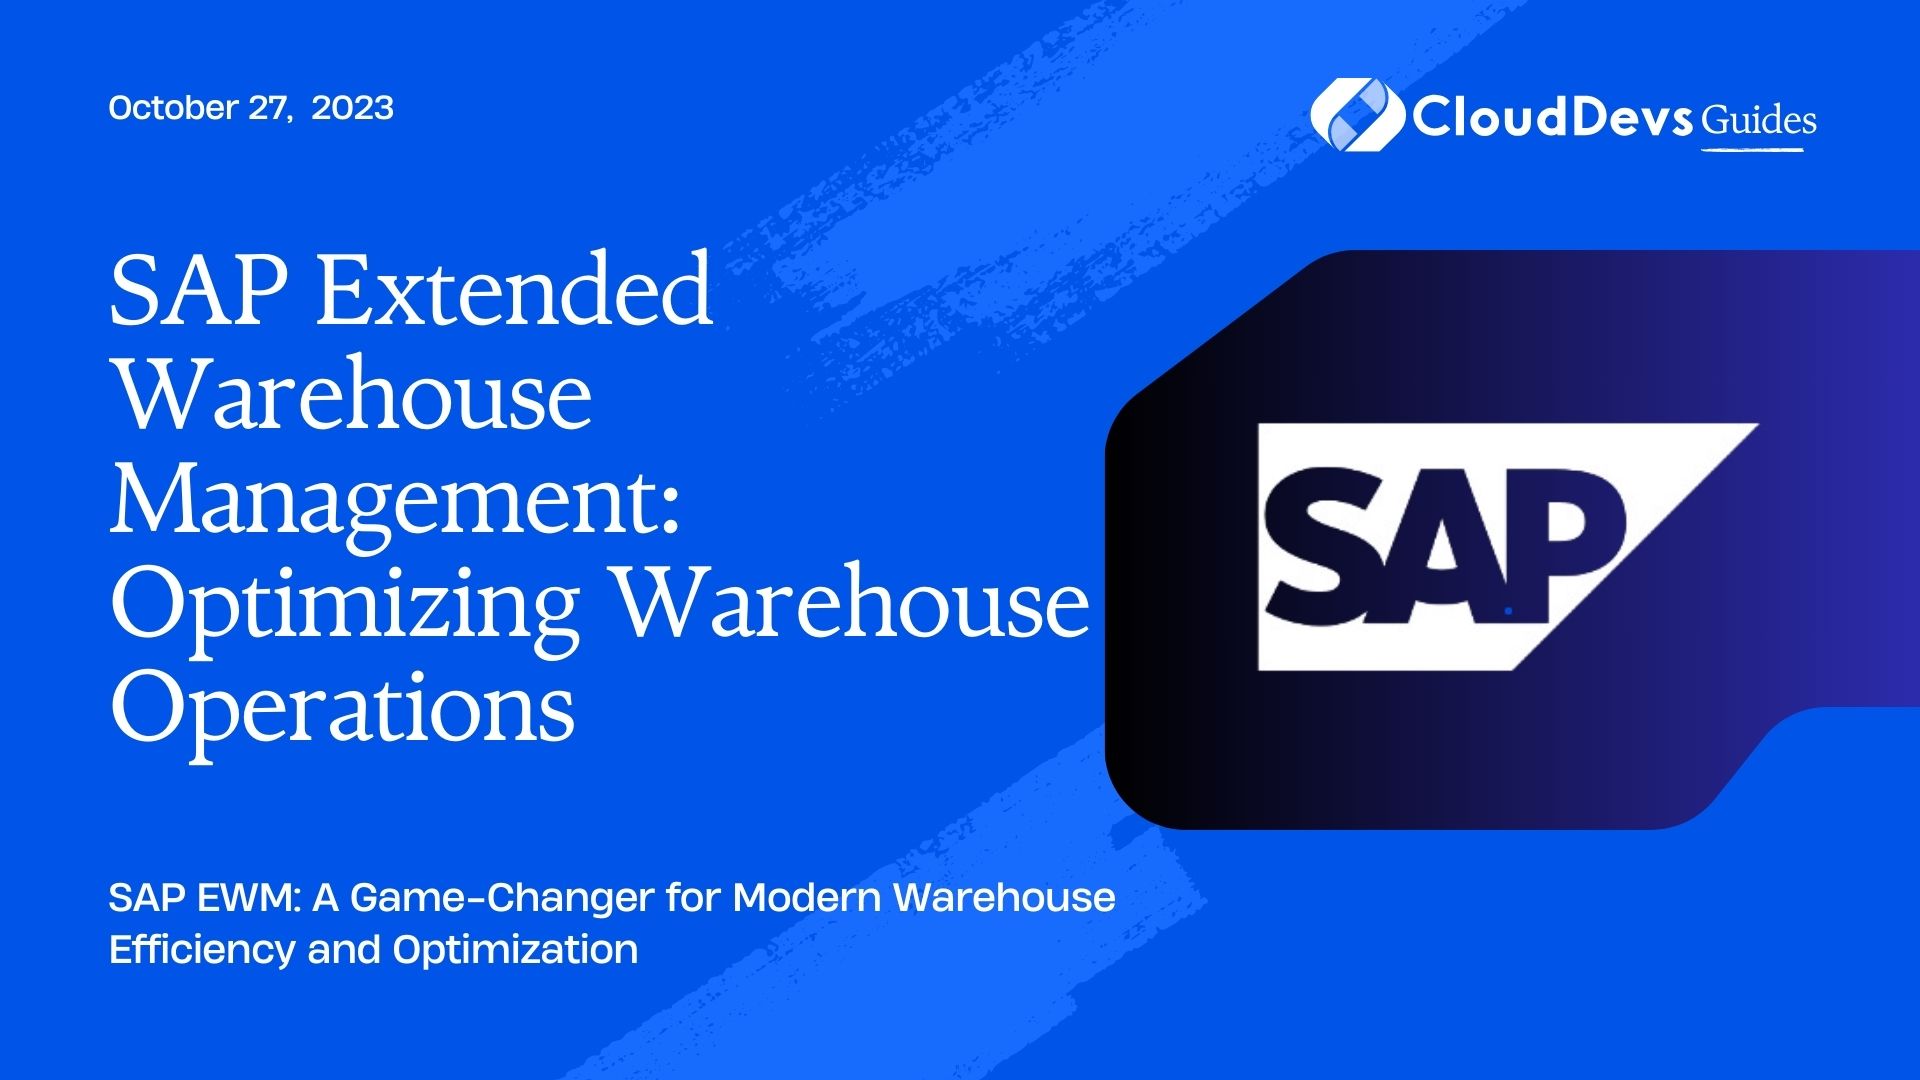 SAP Extended Warehouse Management: Optimizing Warehouse Operations